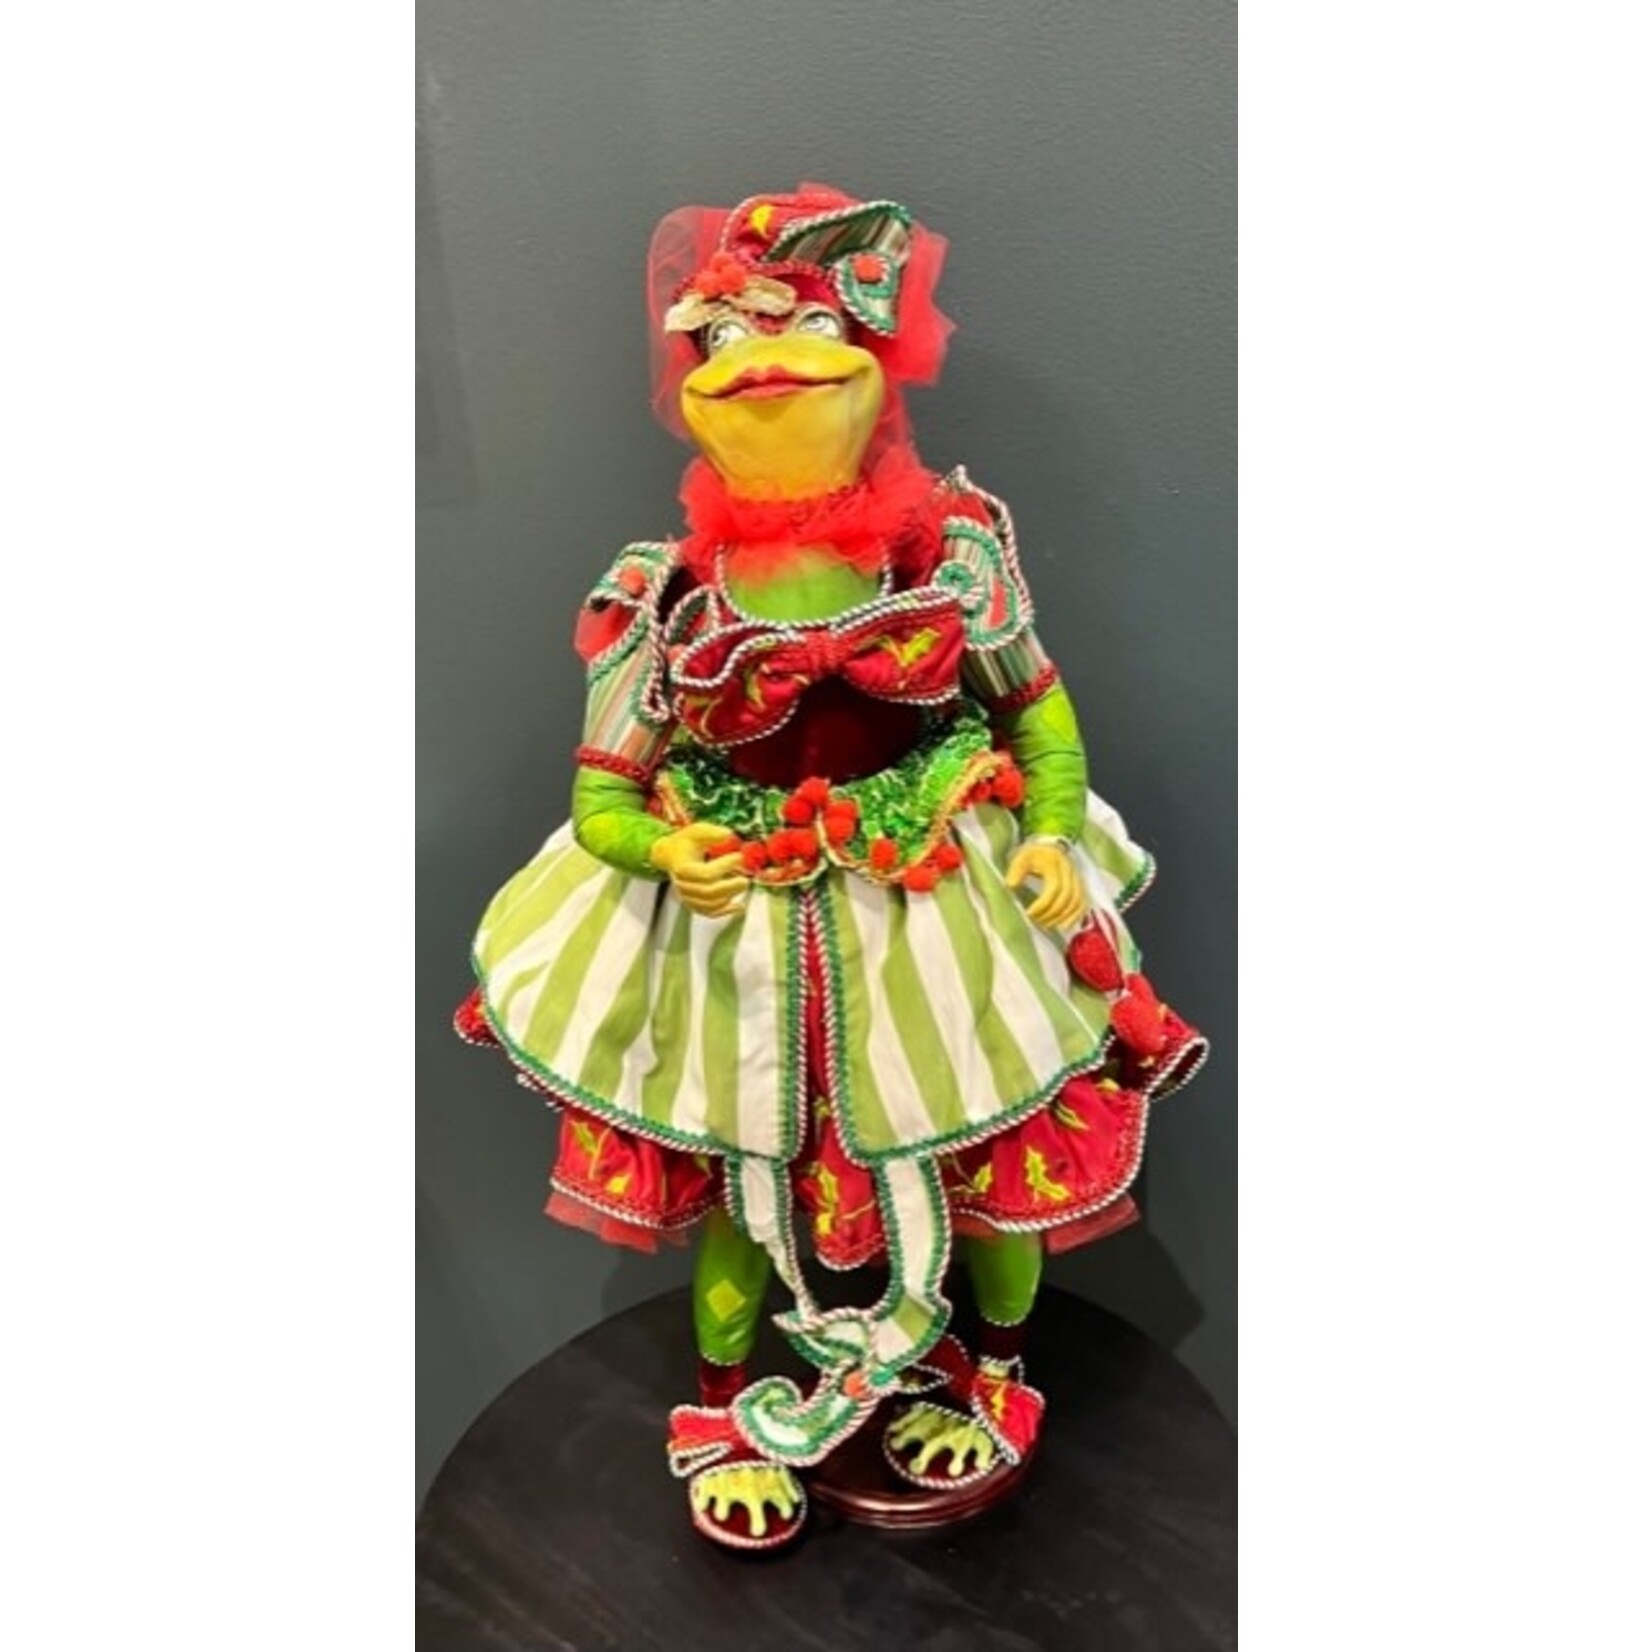 https://cdn.shoplightspeed.com/shops/650587/files/58989527/1652x1652x2/carole-stupell-ltd-vintage-miss-lady-hop-frog-doll.jpg